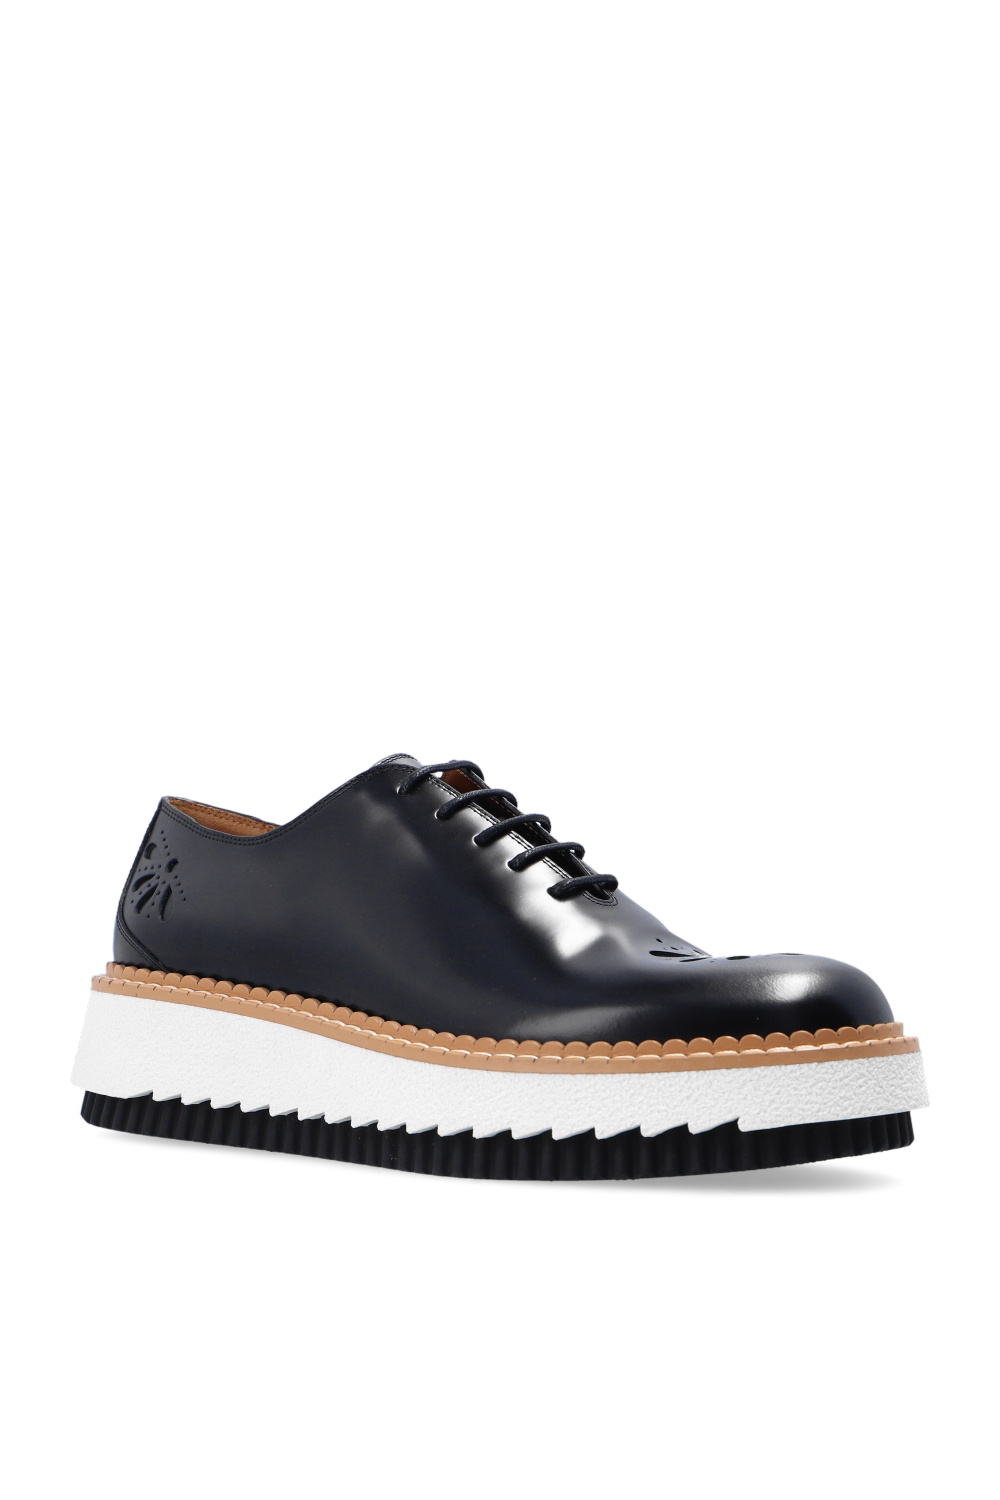 Chloé ‘Kurtys’ leather shoes